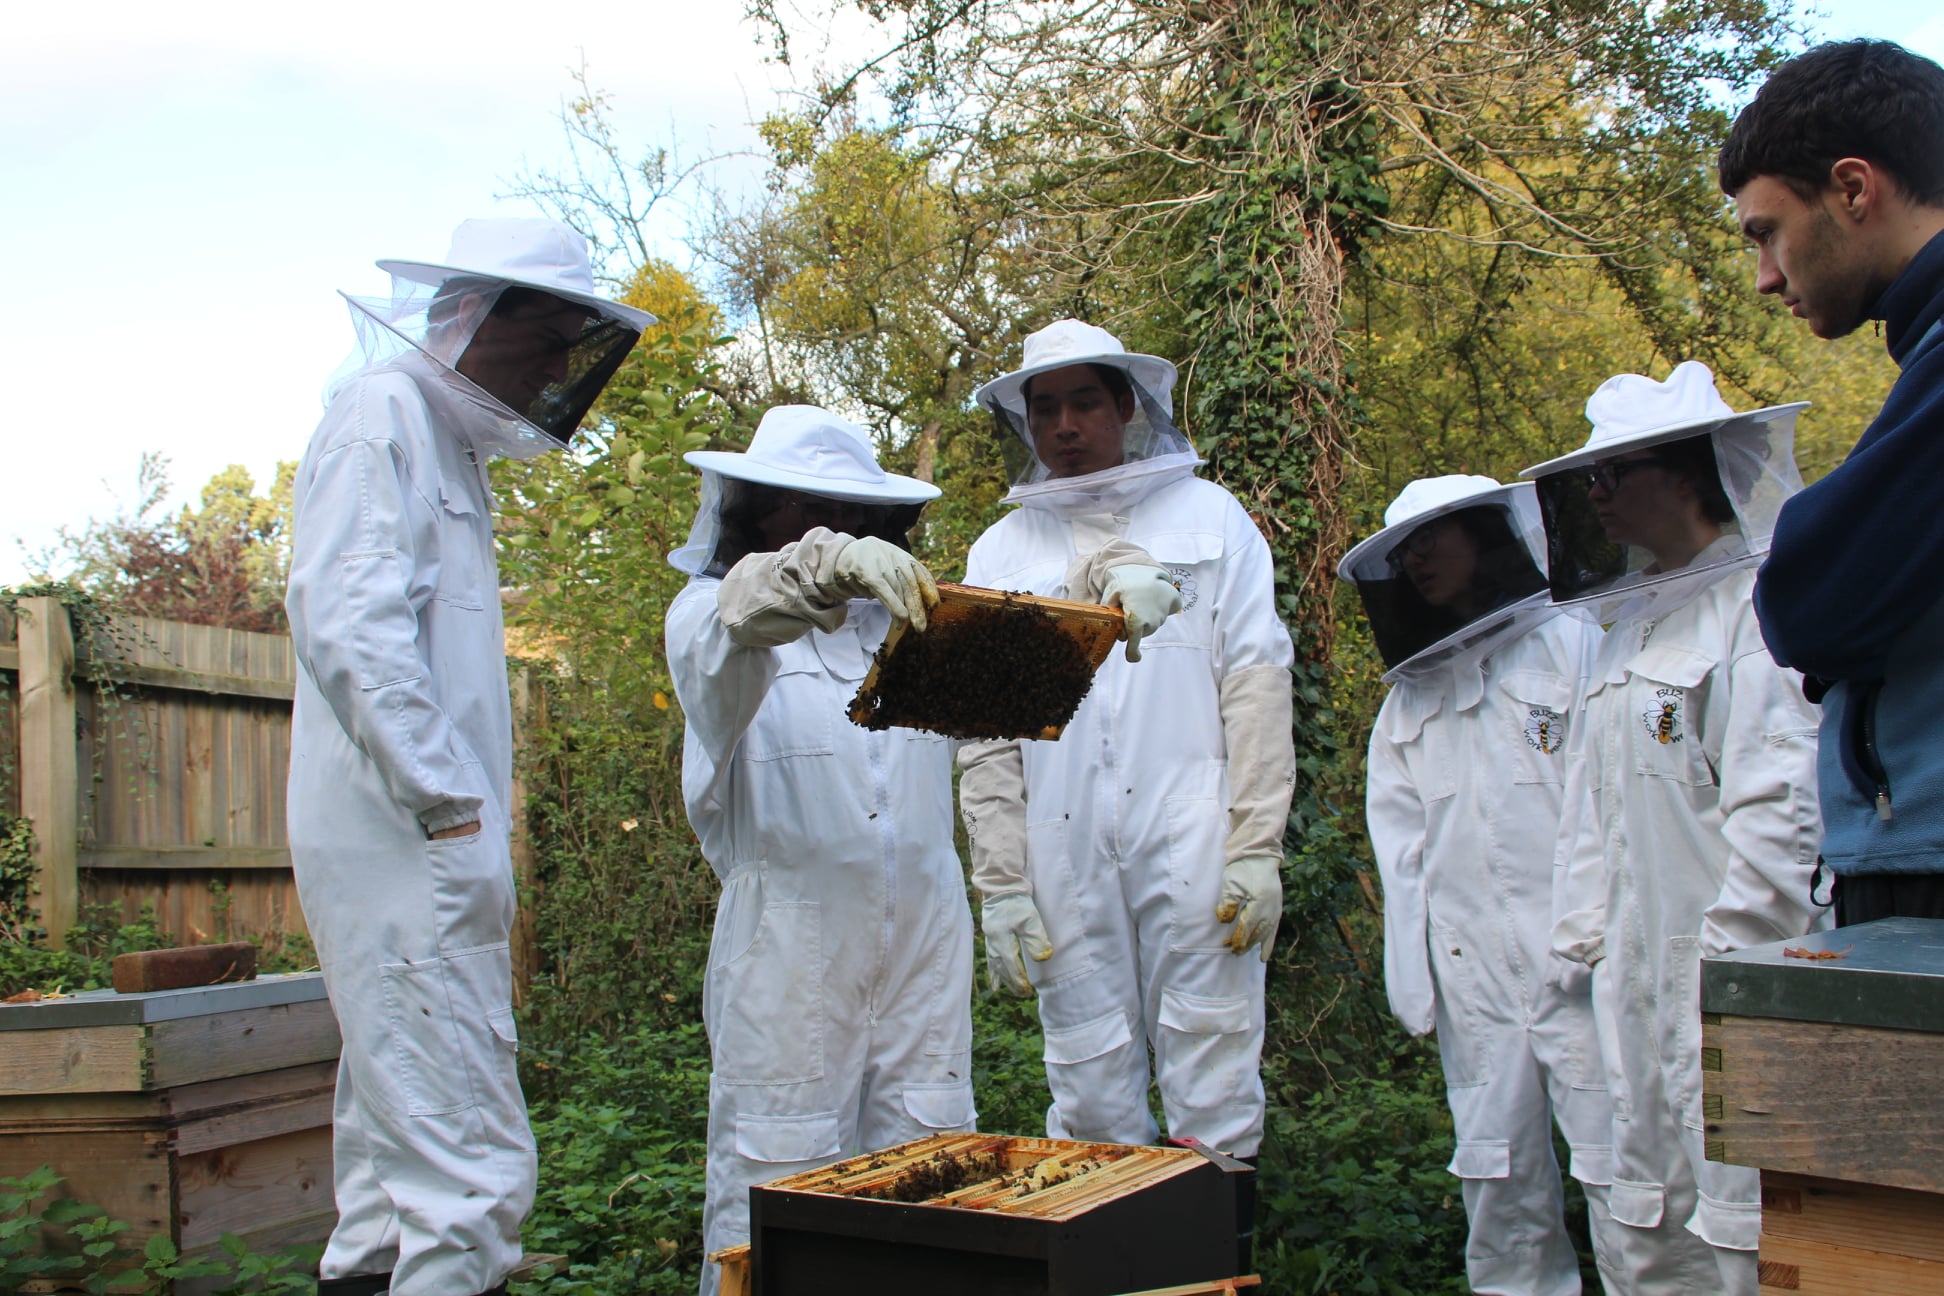 beekeepers viewing hive